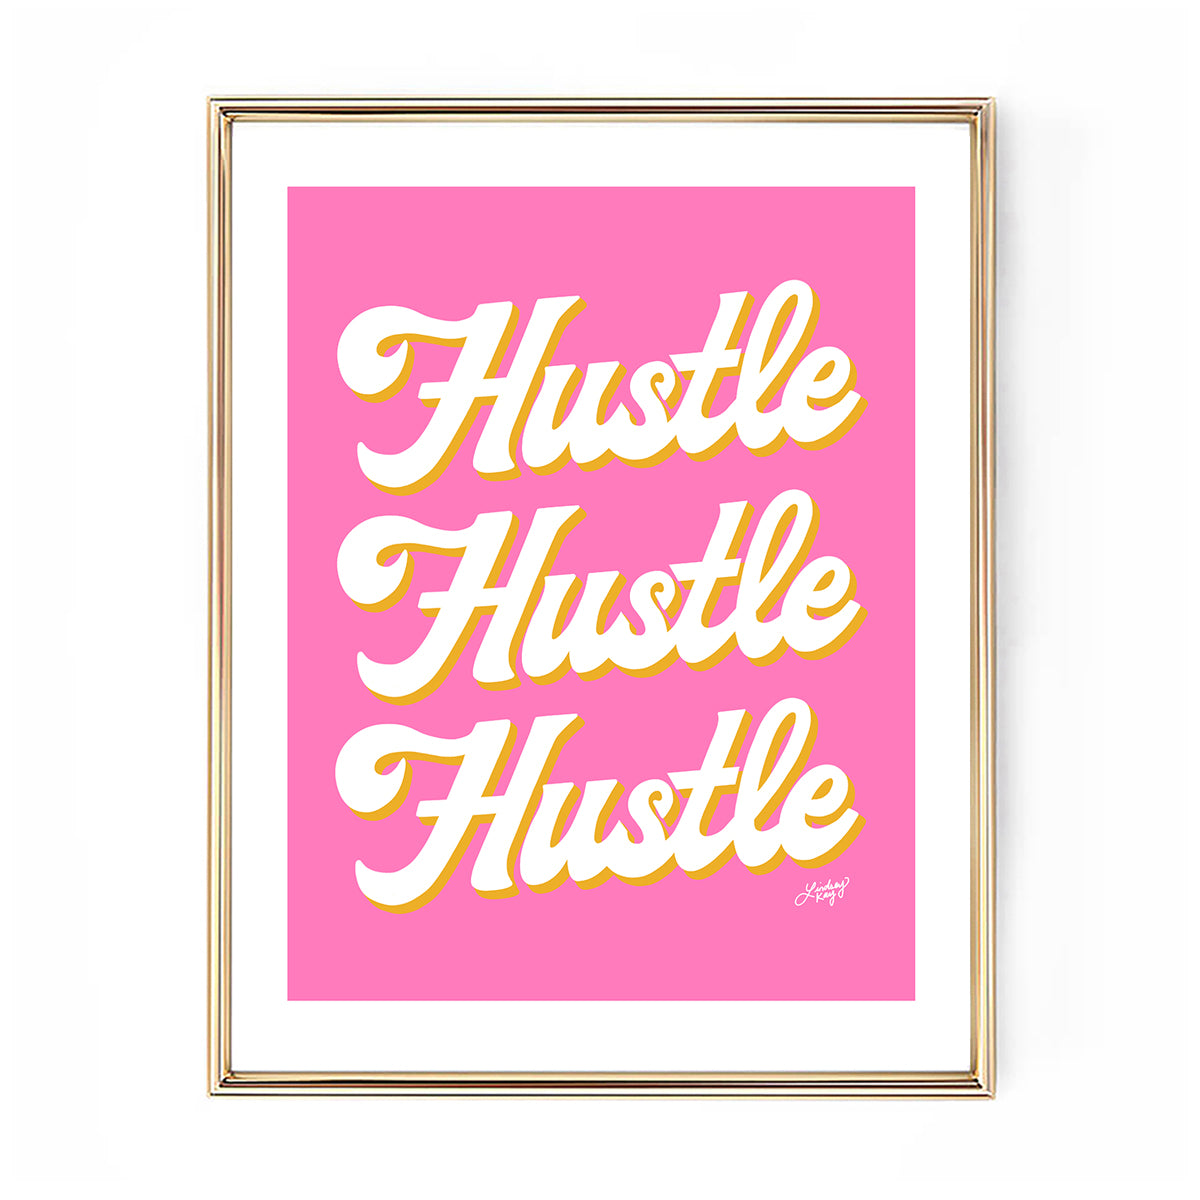 hustle hustle hustle typography reto lettering art print poster pink orange wall art lindsey kay collective